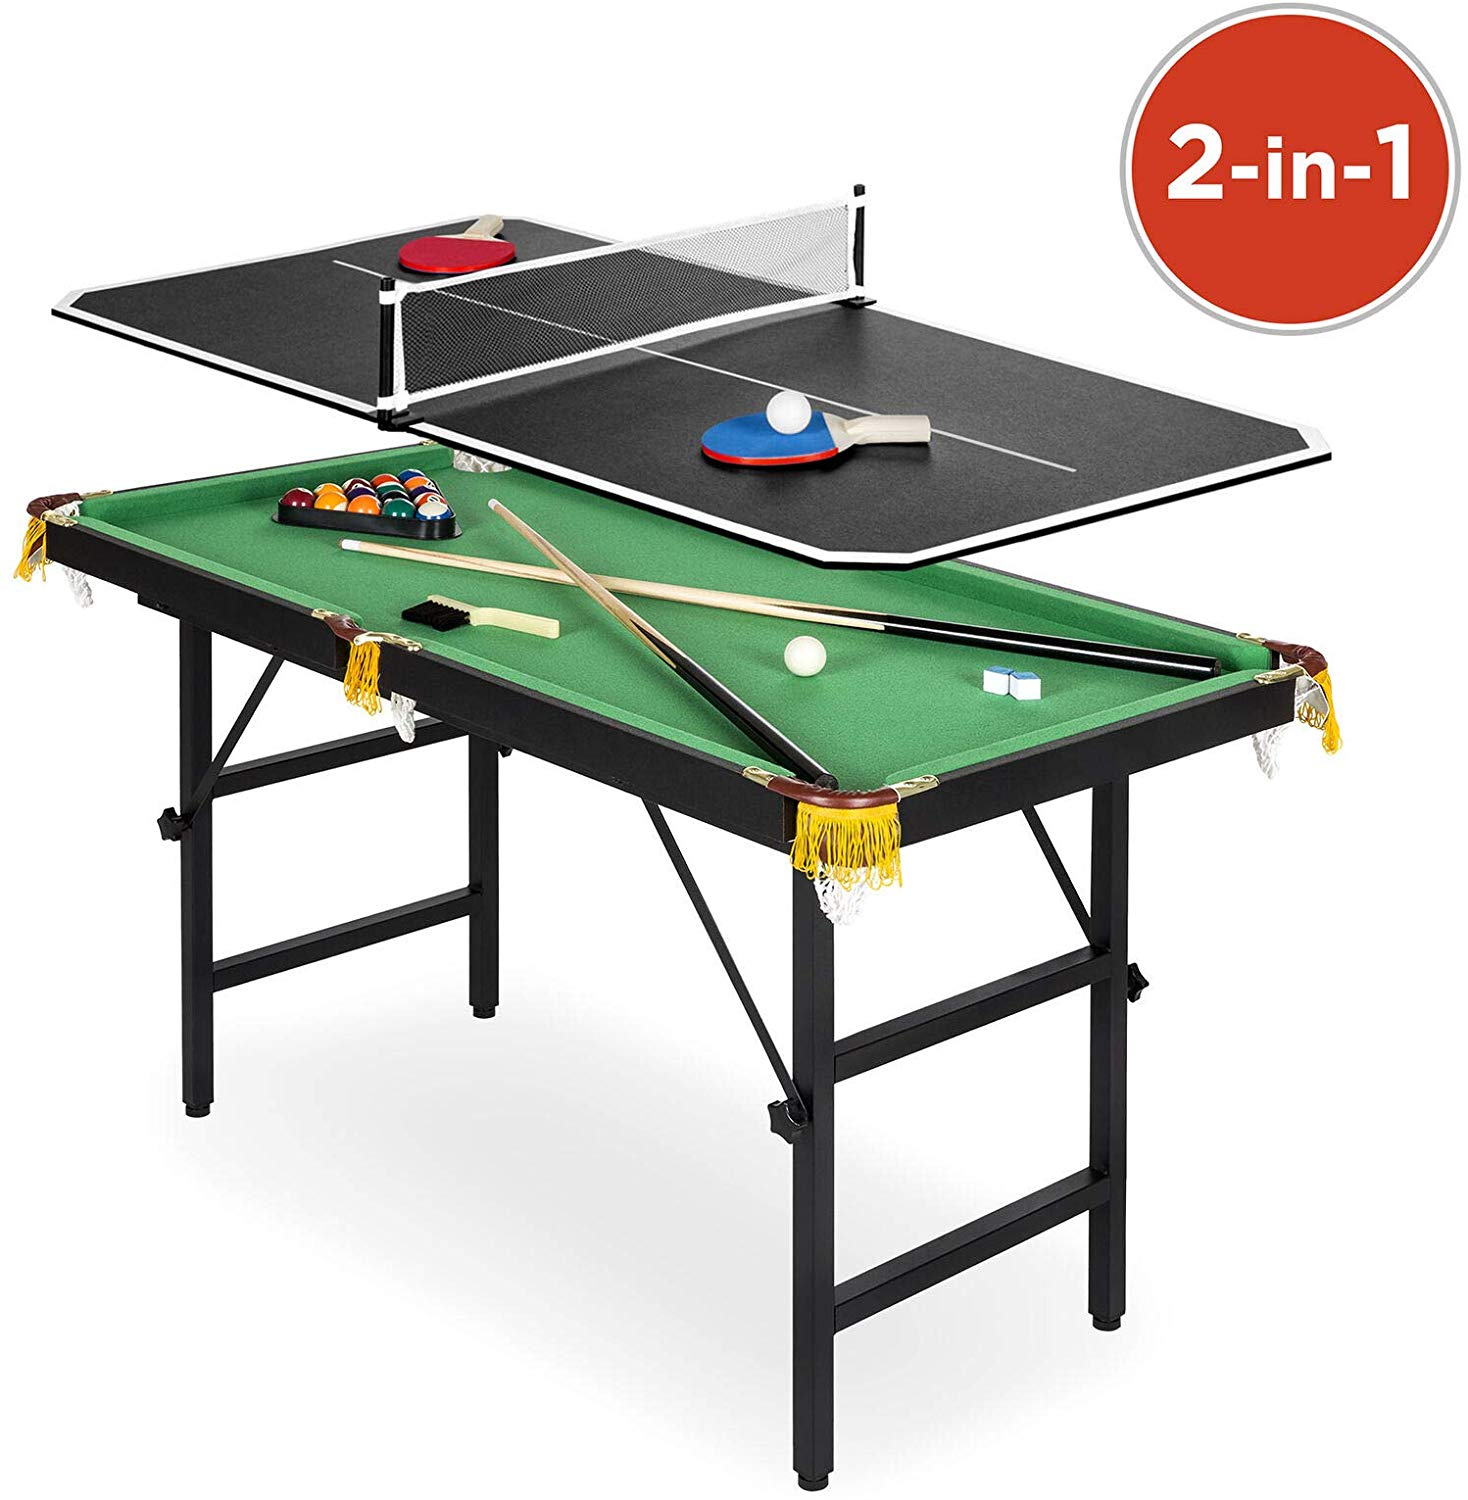 Precioso Table Tennis and Billiards Game Table Set